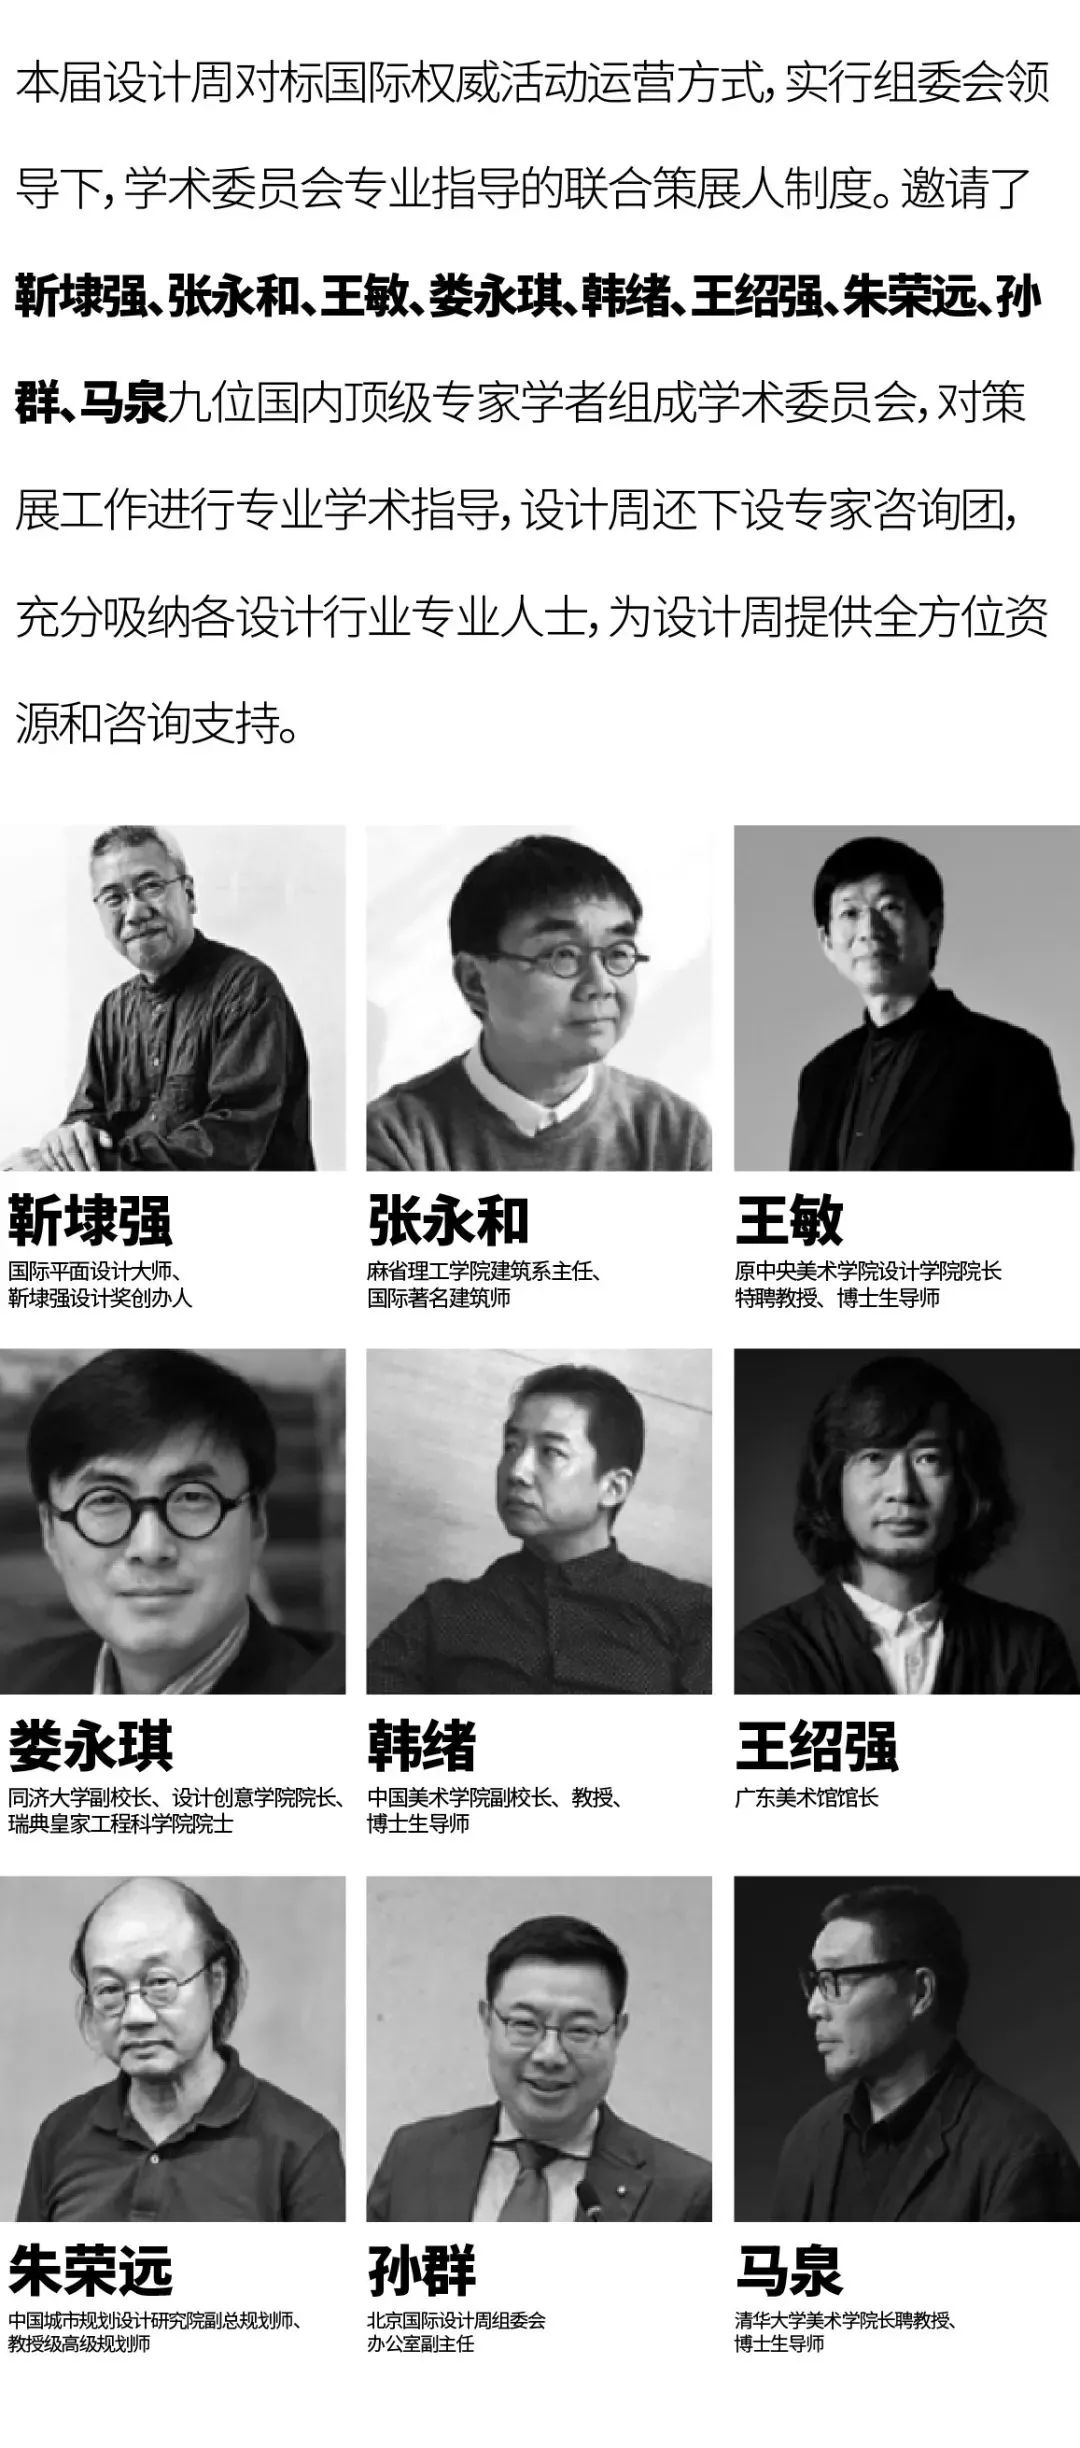 2021深圳设计周 Shenzhen Design Week